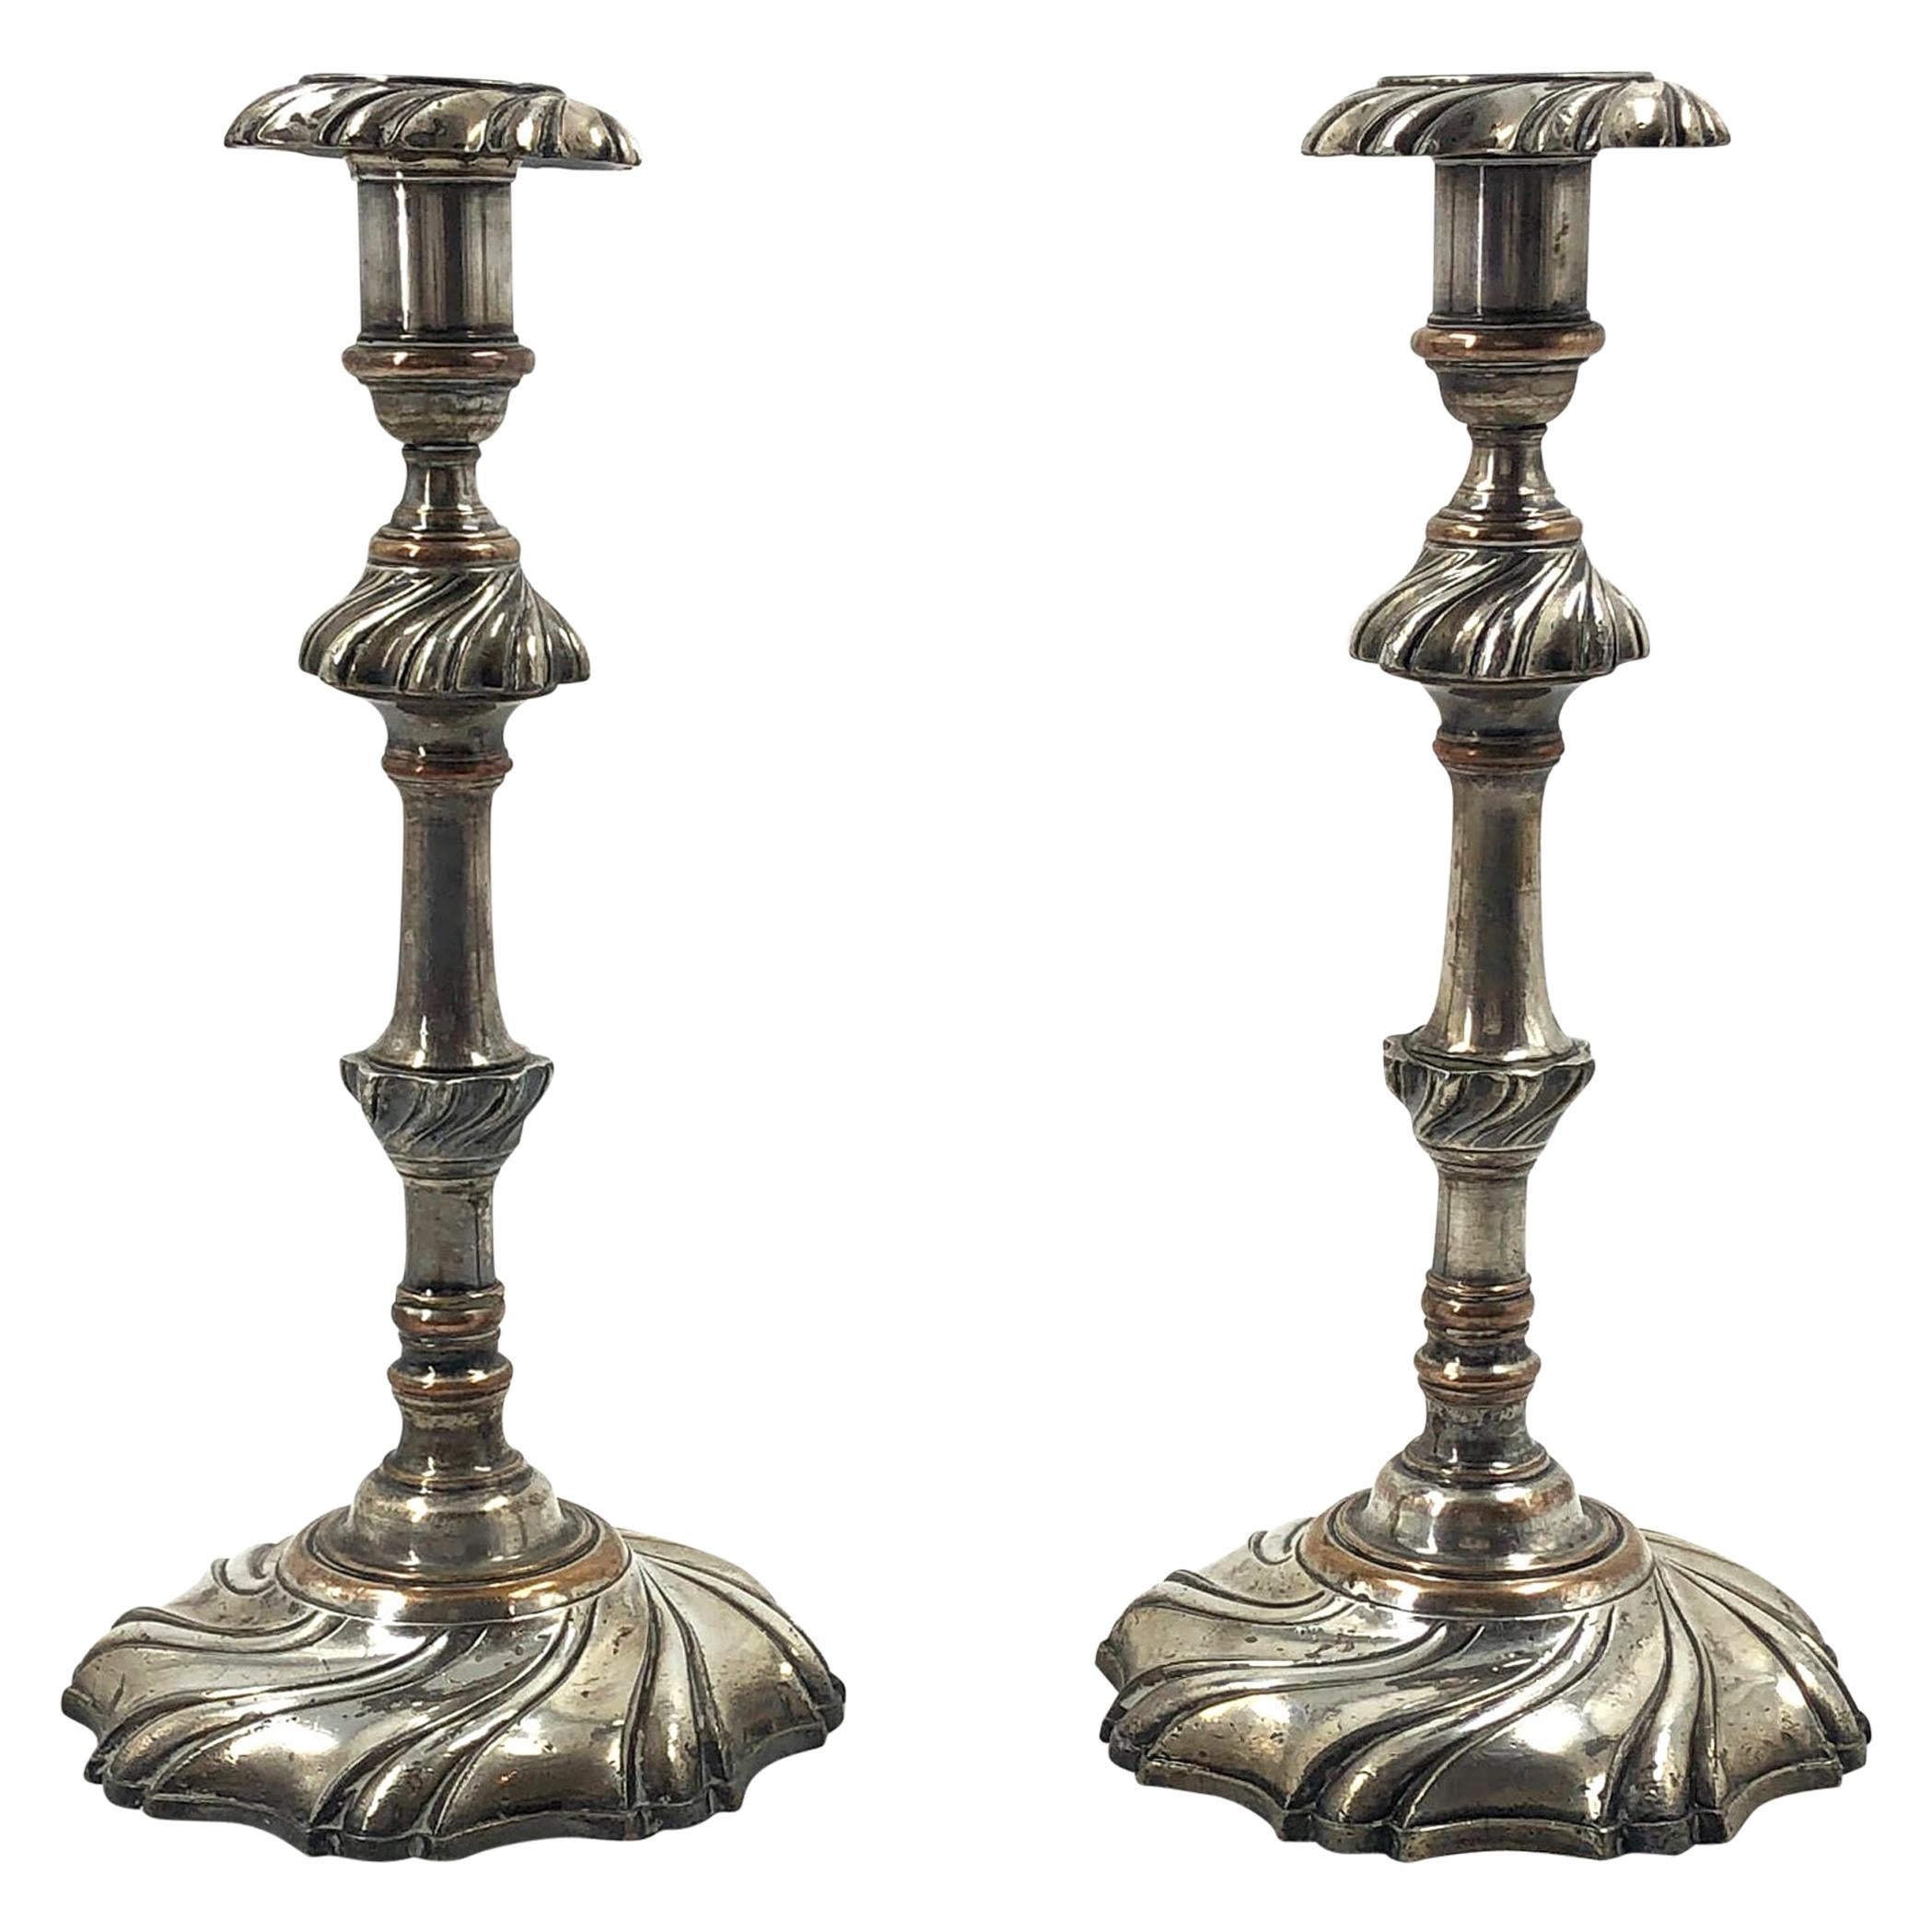 Pair of Georgian Silvered Candlesticks